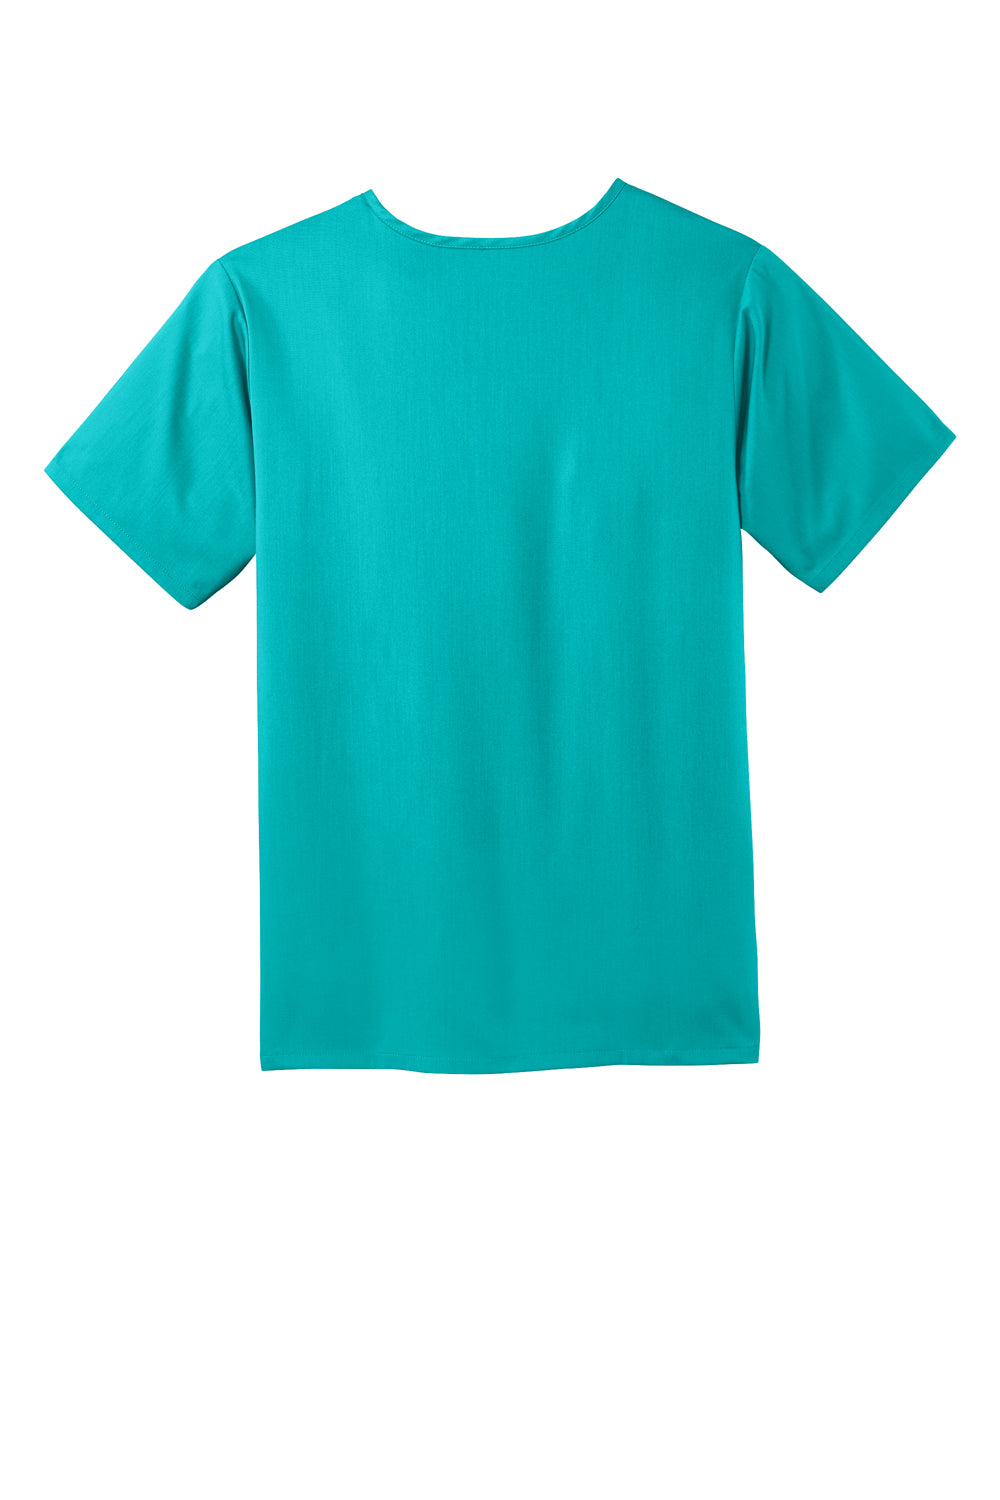 Wonderwink WW5068 Premiere Flex Short Sleeve V-Neck Shirt Teal Blue Flat Back